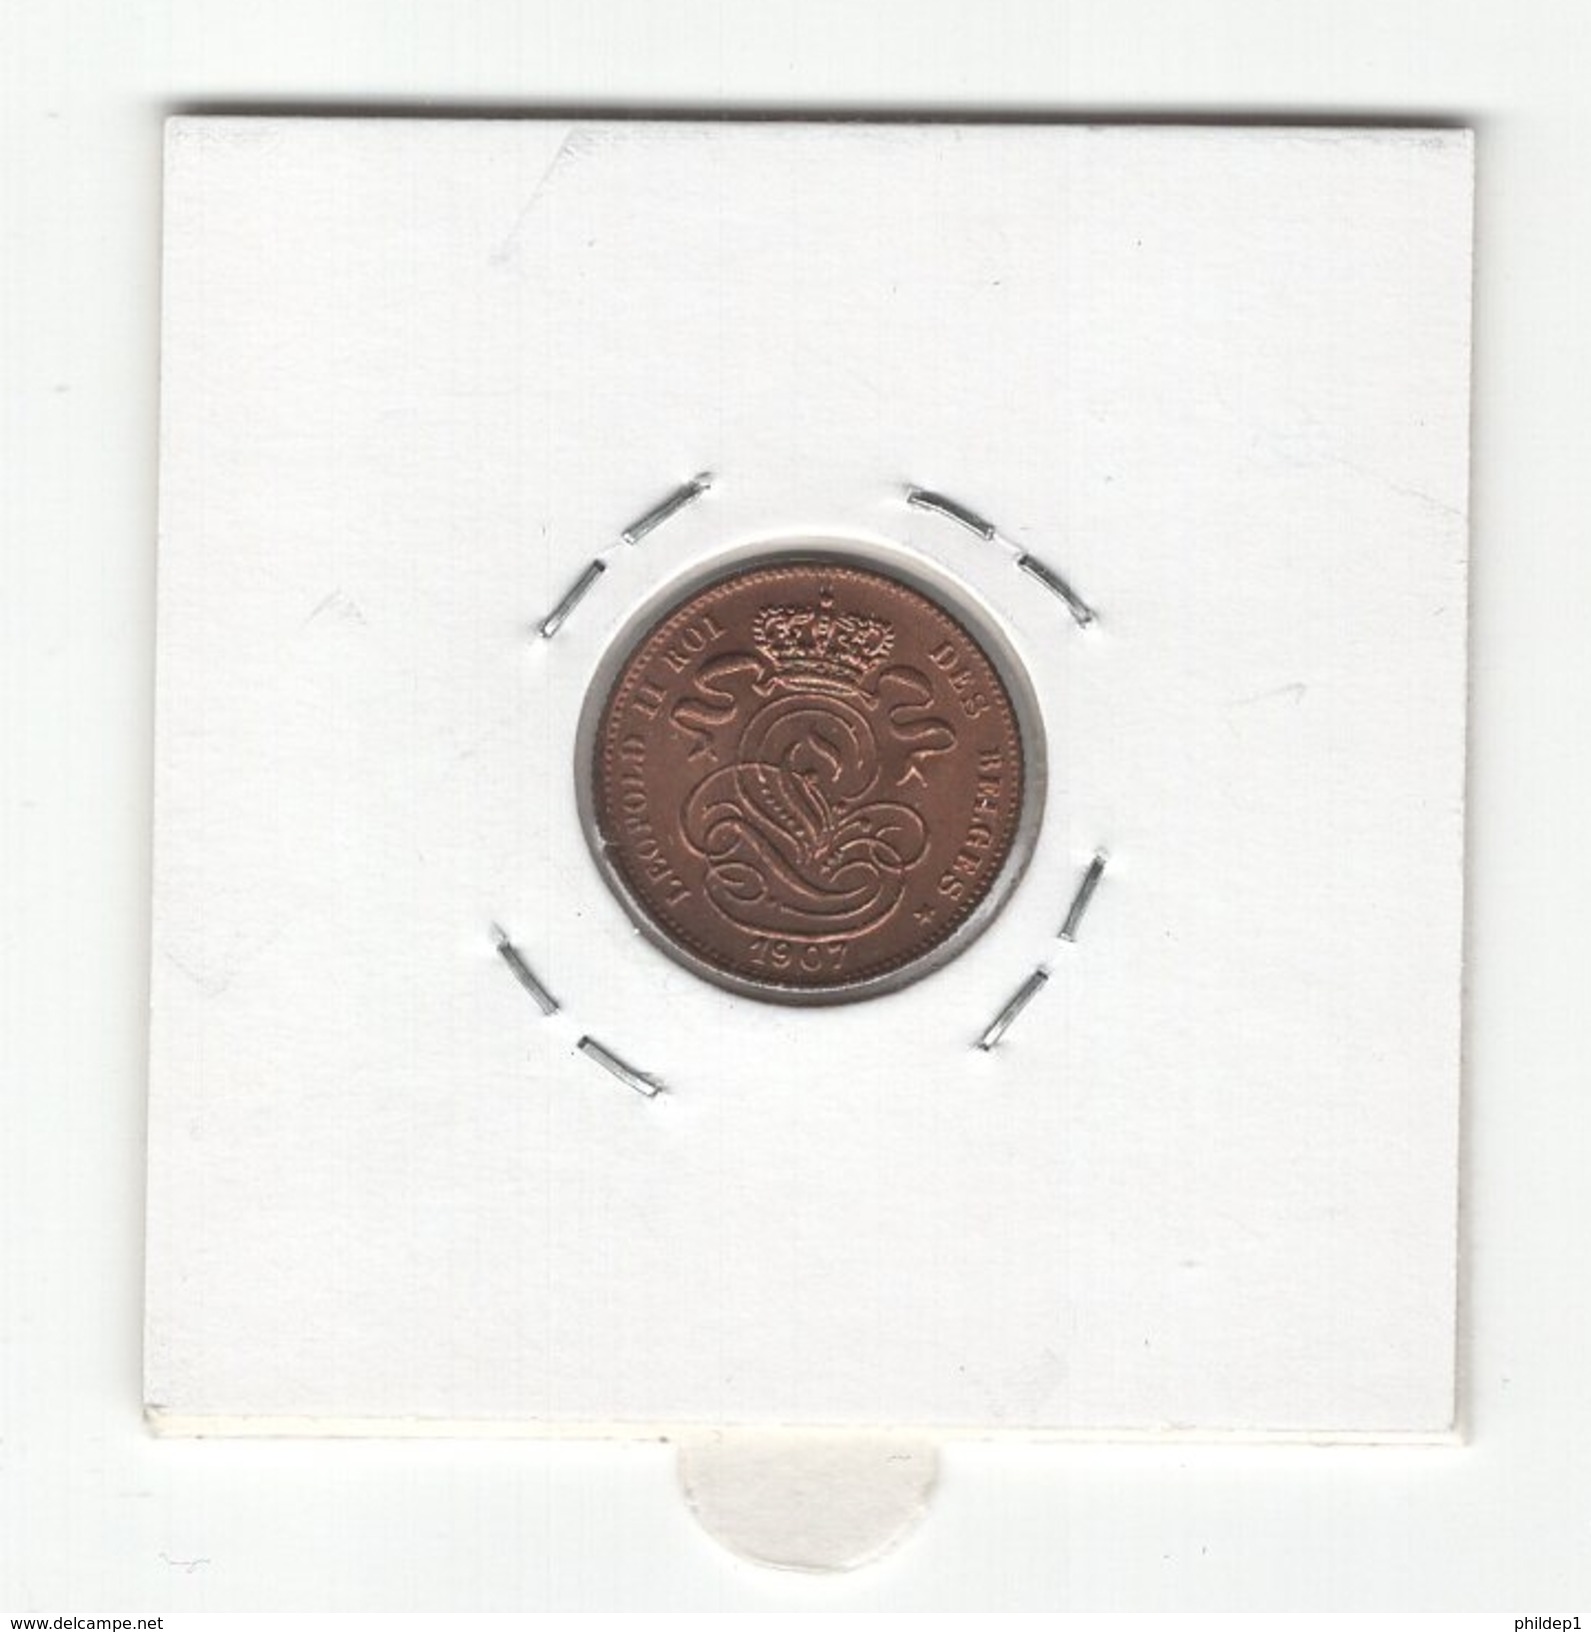 Belgique. Léopold II 1 Cent. (3). 1907 FR.TTB++. Morin #234 - 1 Centime